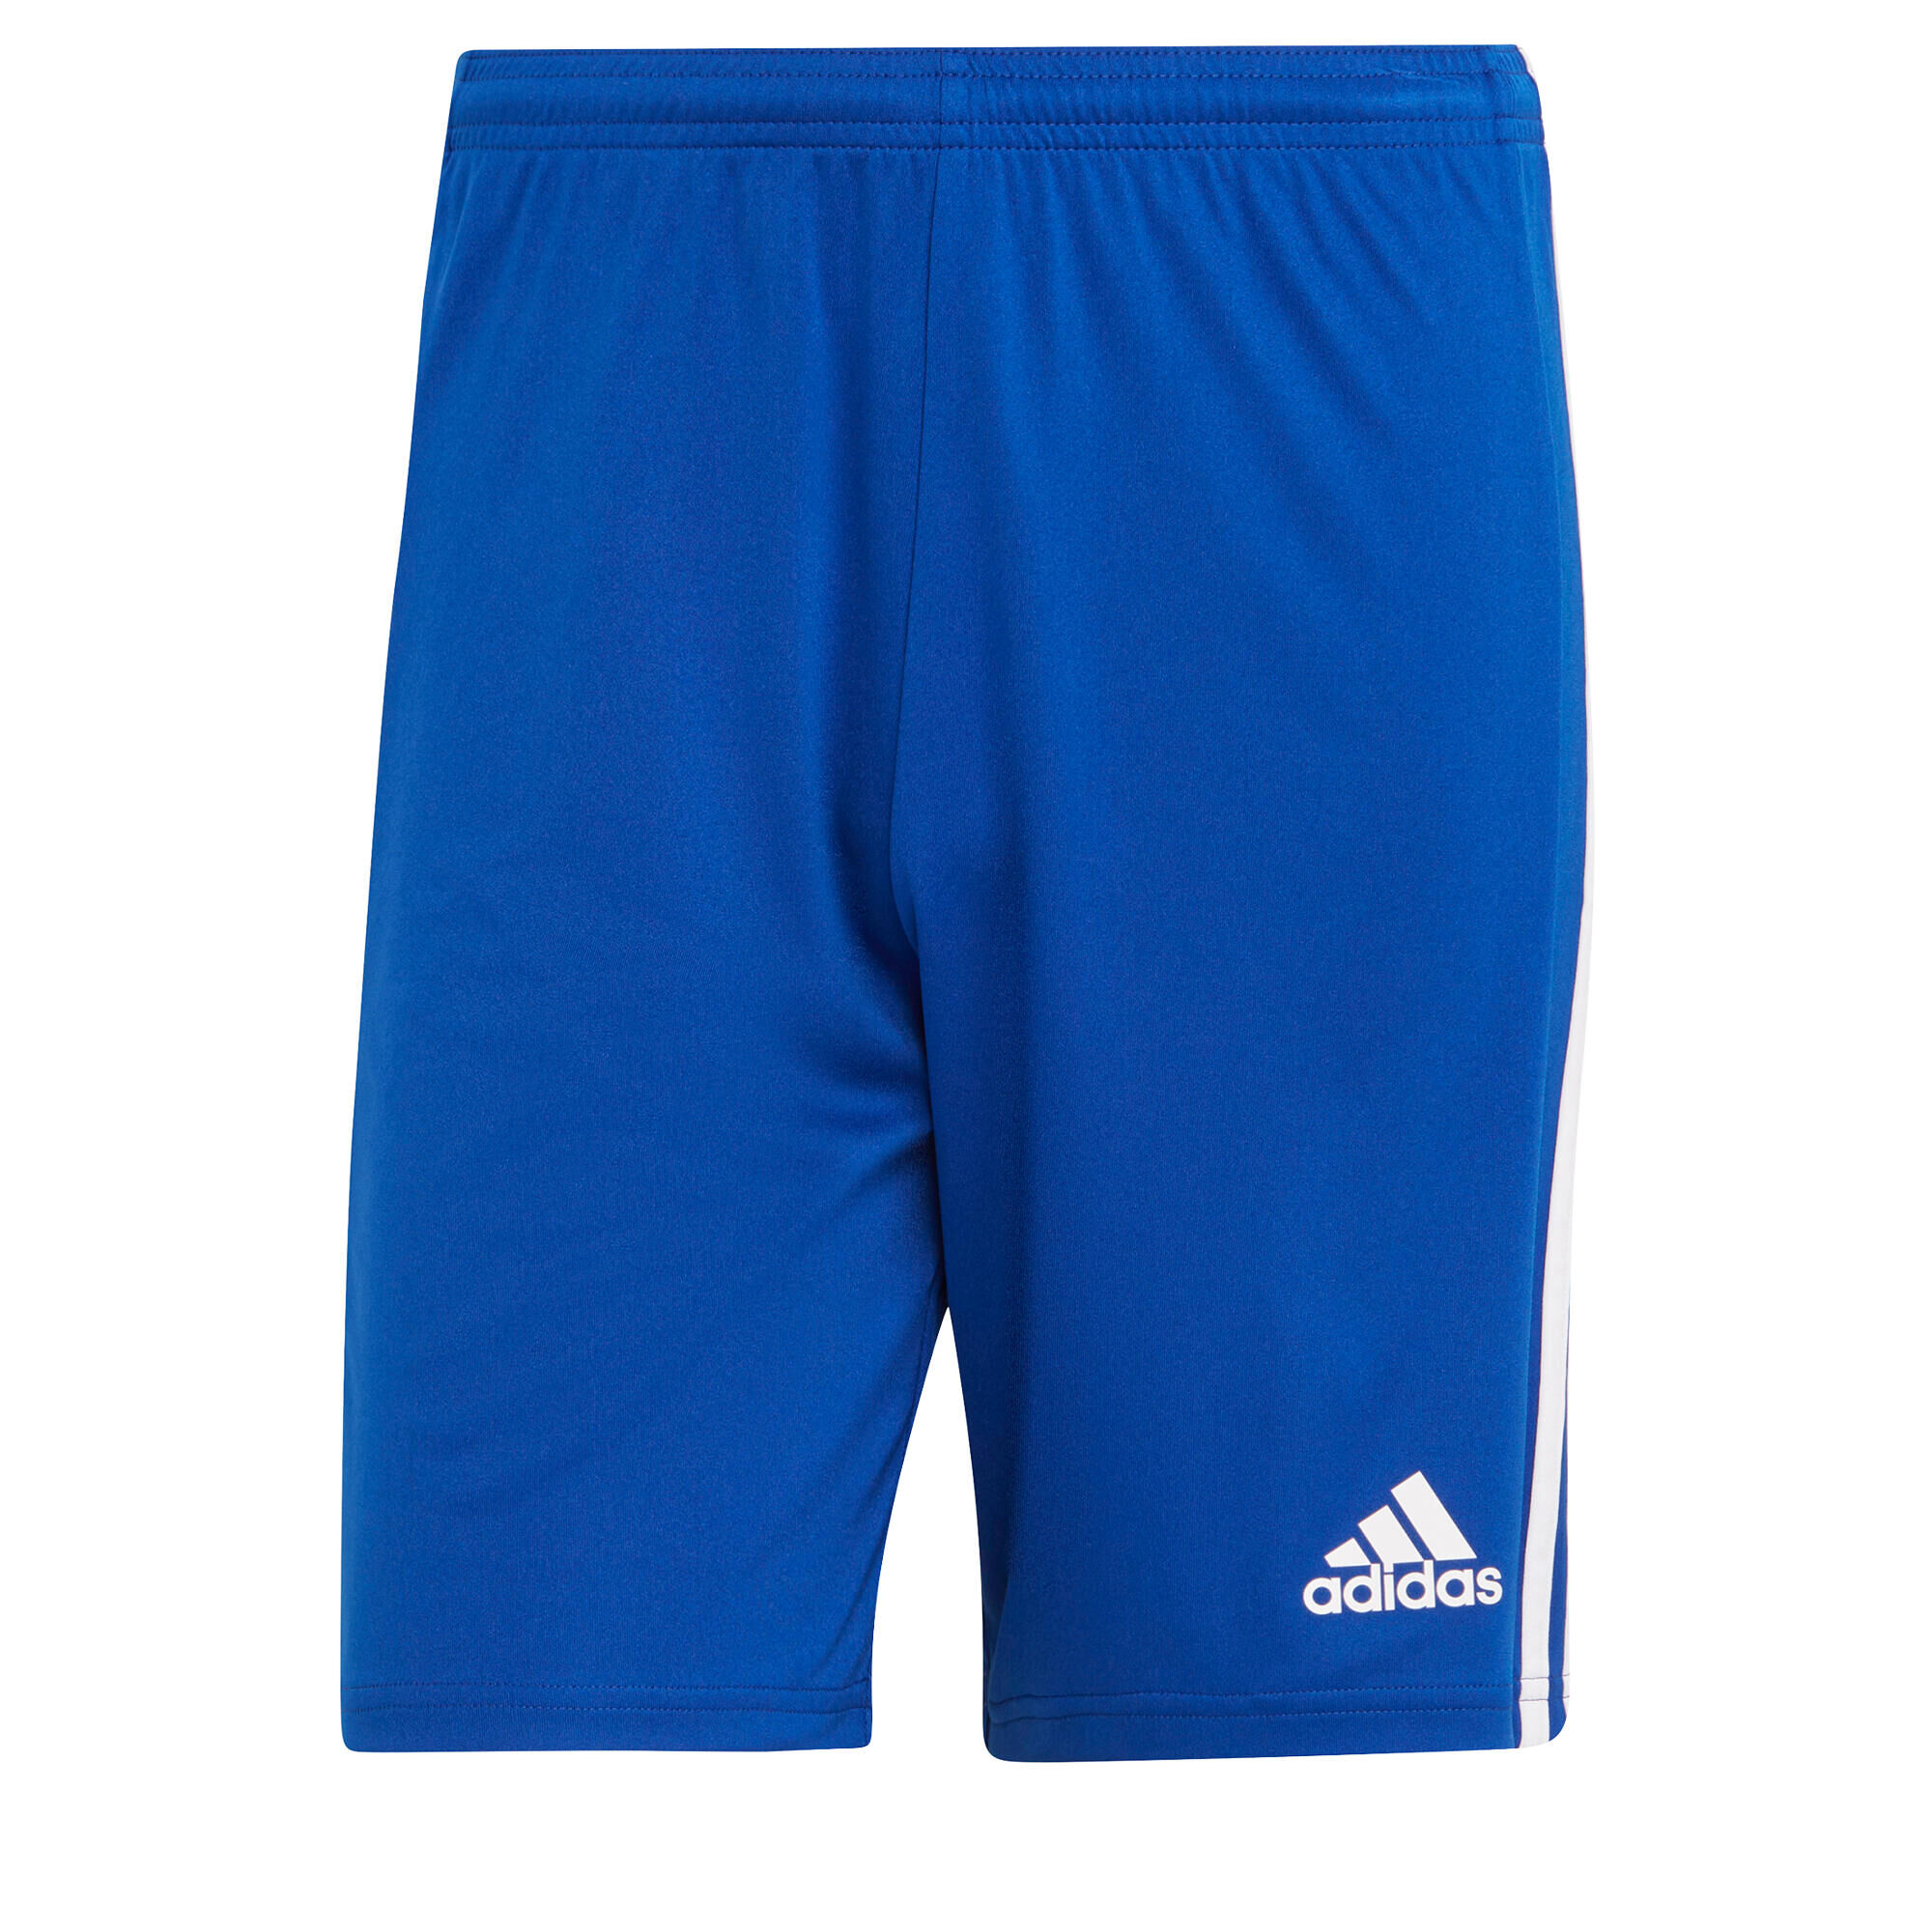 ADIDAS Men's Squadra Football Shorts - Blue